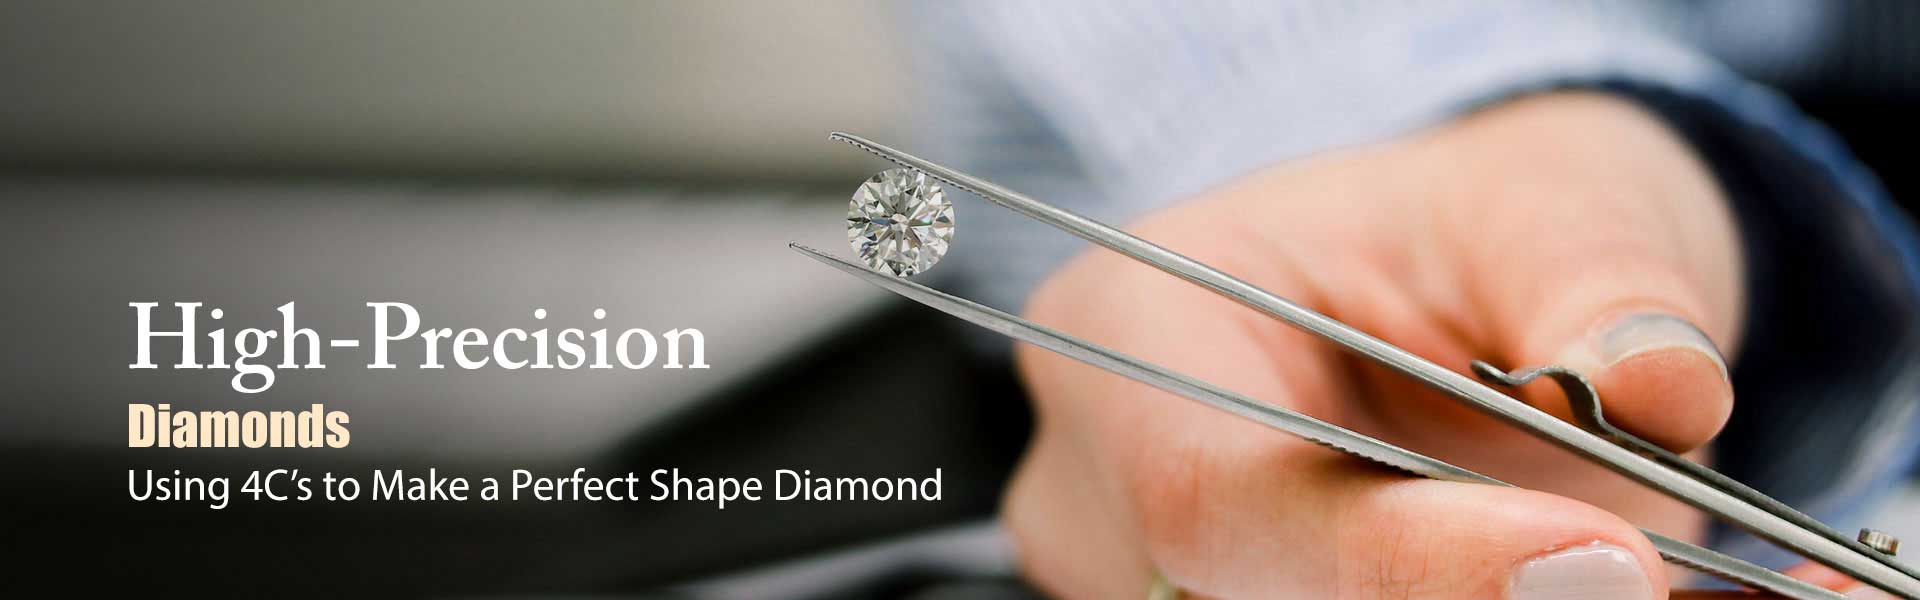  Certified Diamond  Manufacturers in Missouri